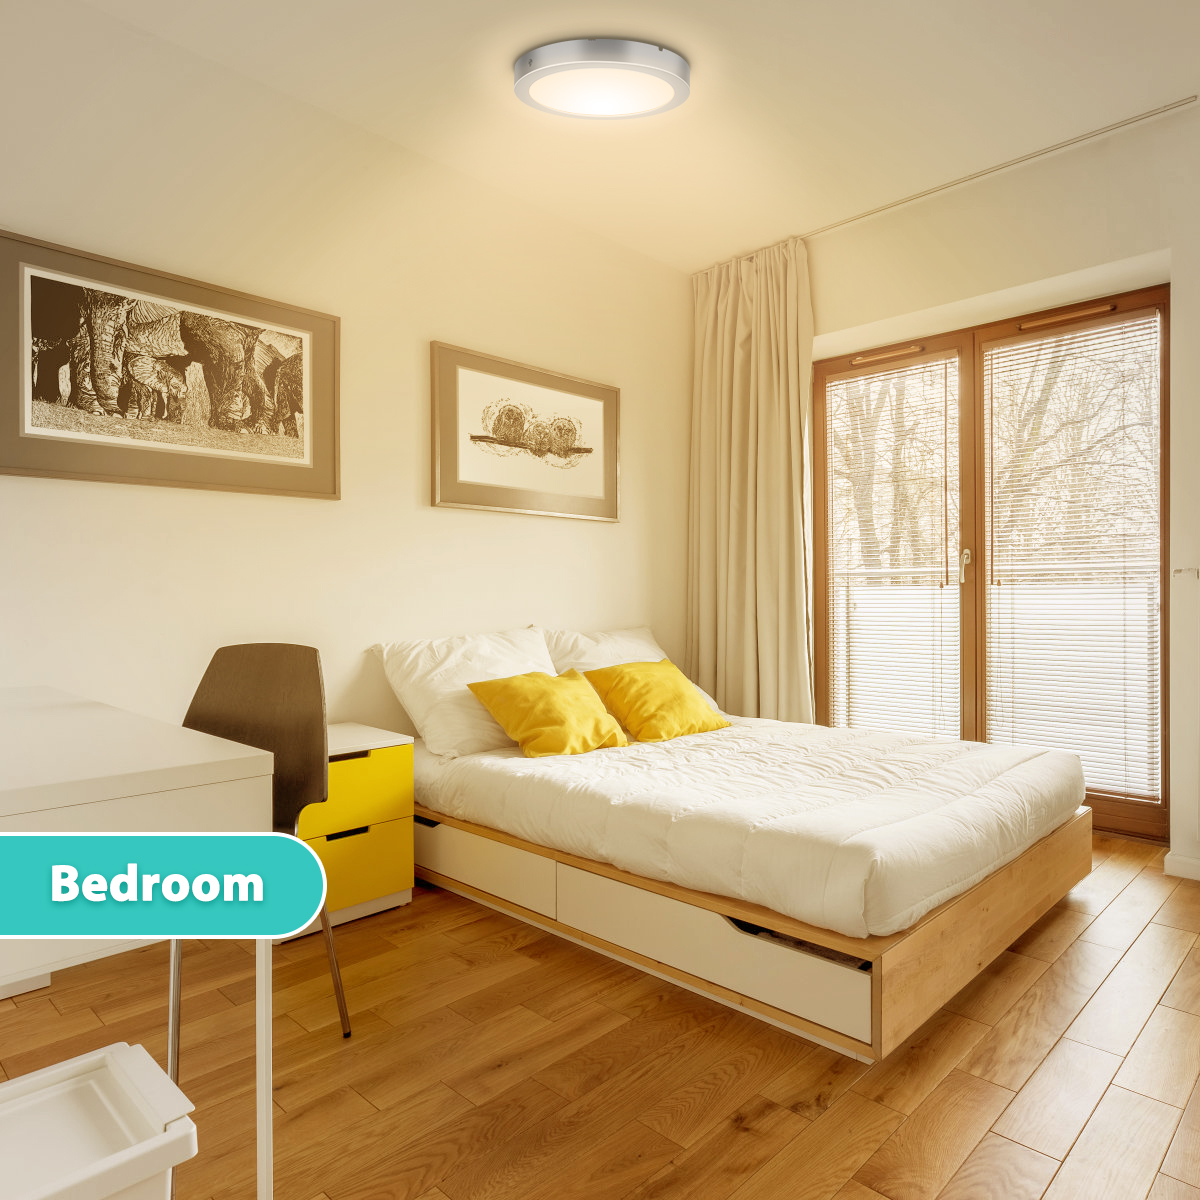 Find Elfeland AC85-265V 18W 3000K LED Ceiling Lights IP54 Waterproof Indoor Living Room Bedroom Lamp for Sale on Gipsybee.com with cryptocurrencies